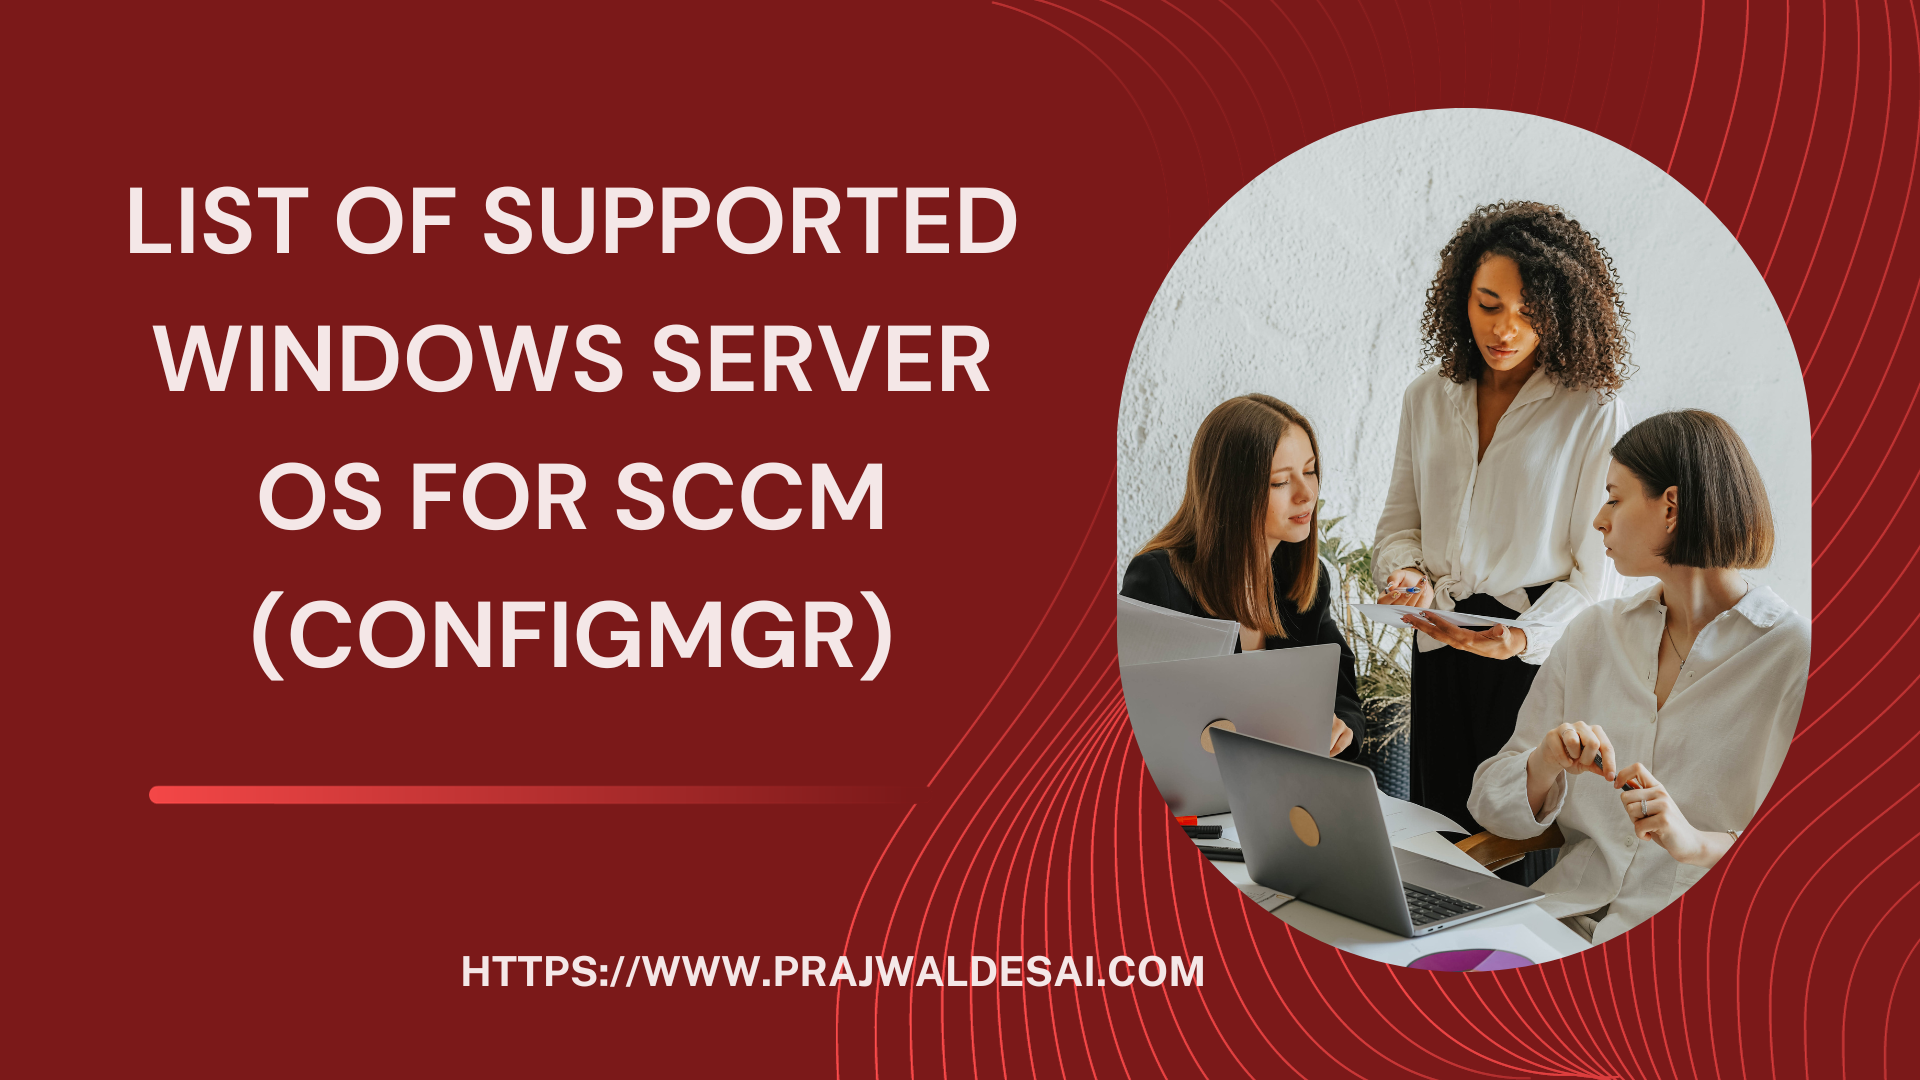 List of Supported Windows Server OS for SCCM (ConfigMgr)